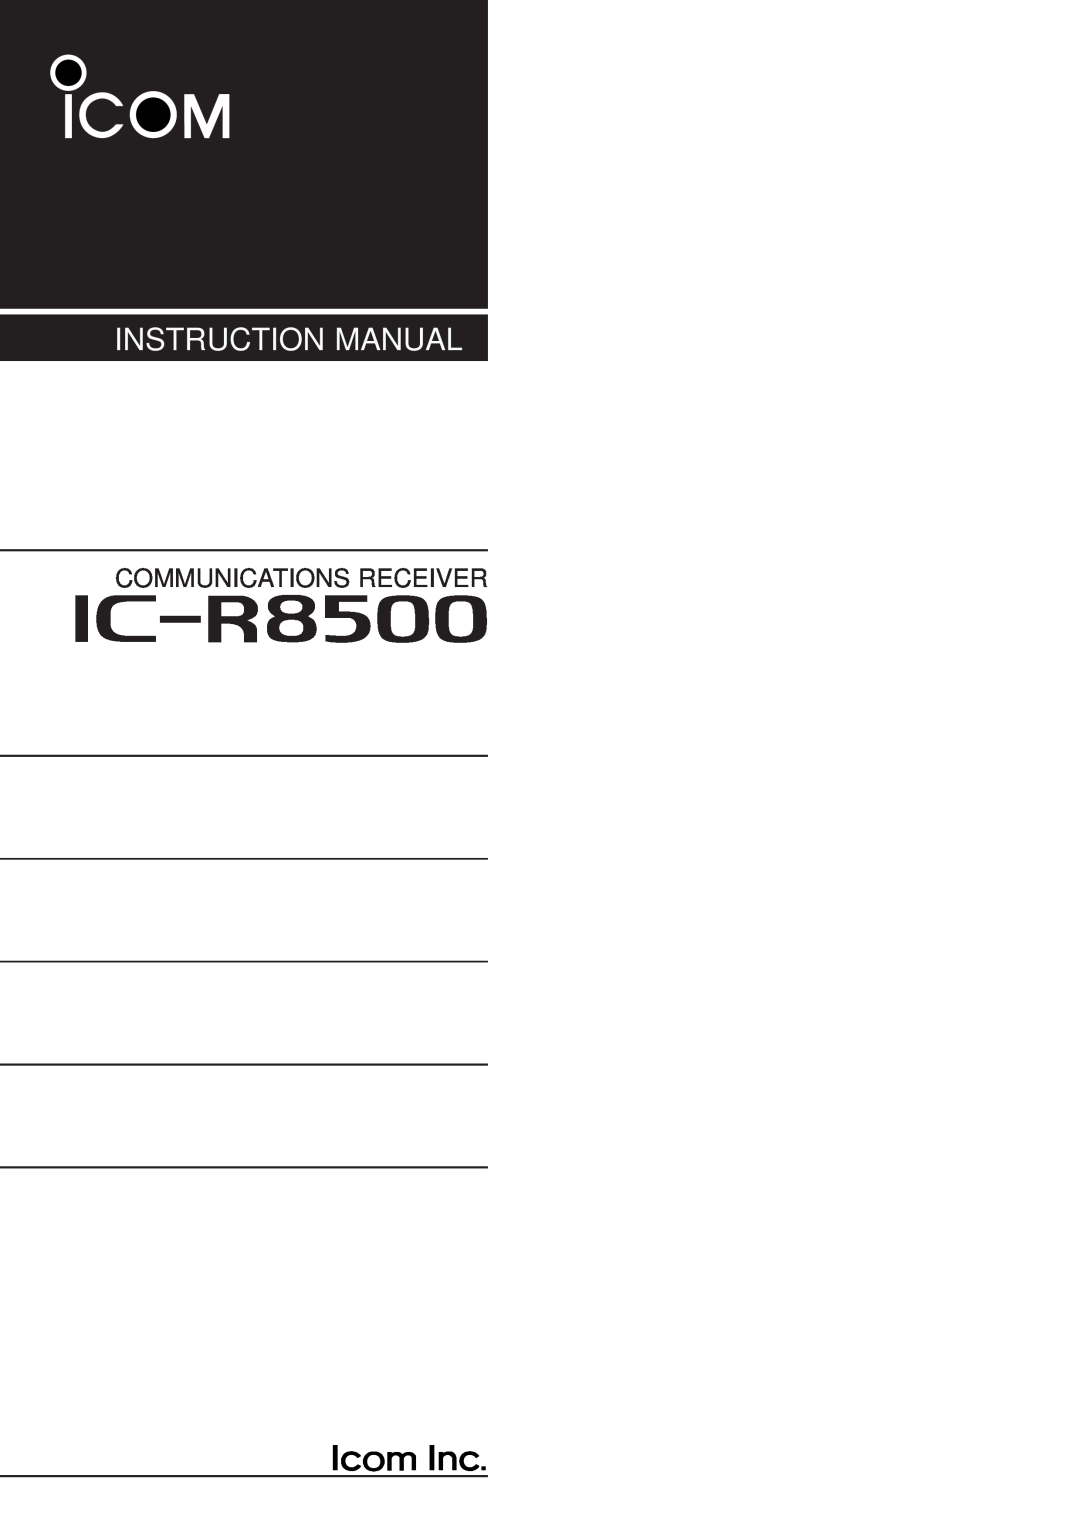 Icom IC-R8500 instruction manual iC-r8500, Communications Receiver 